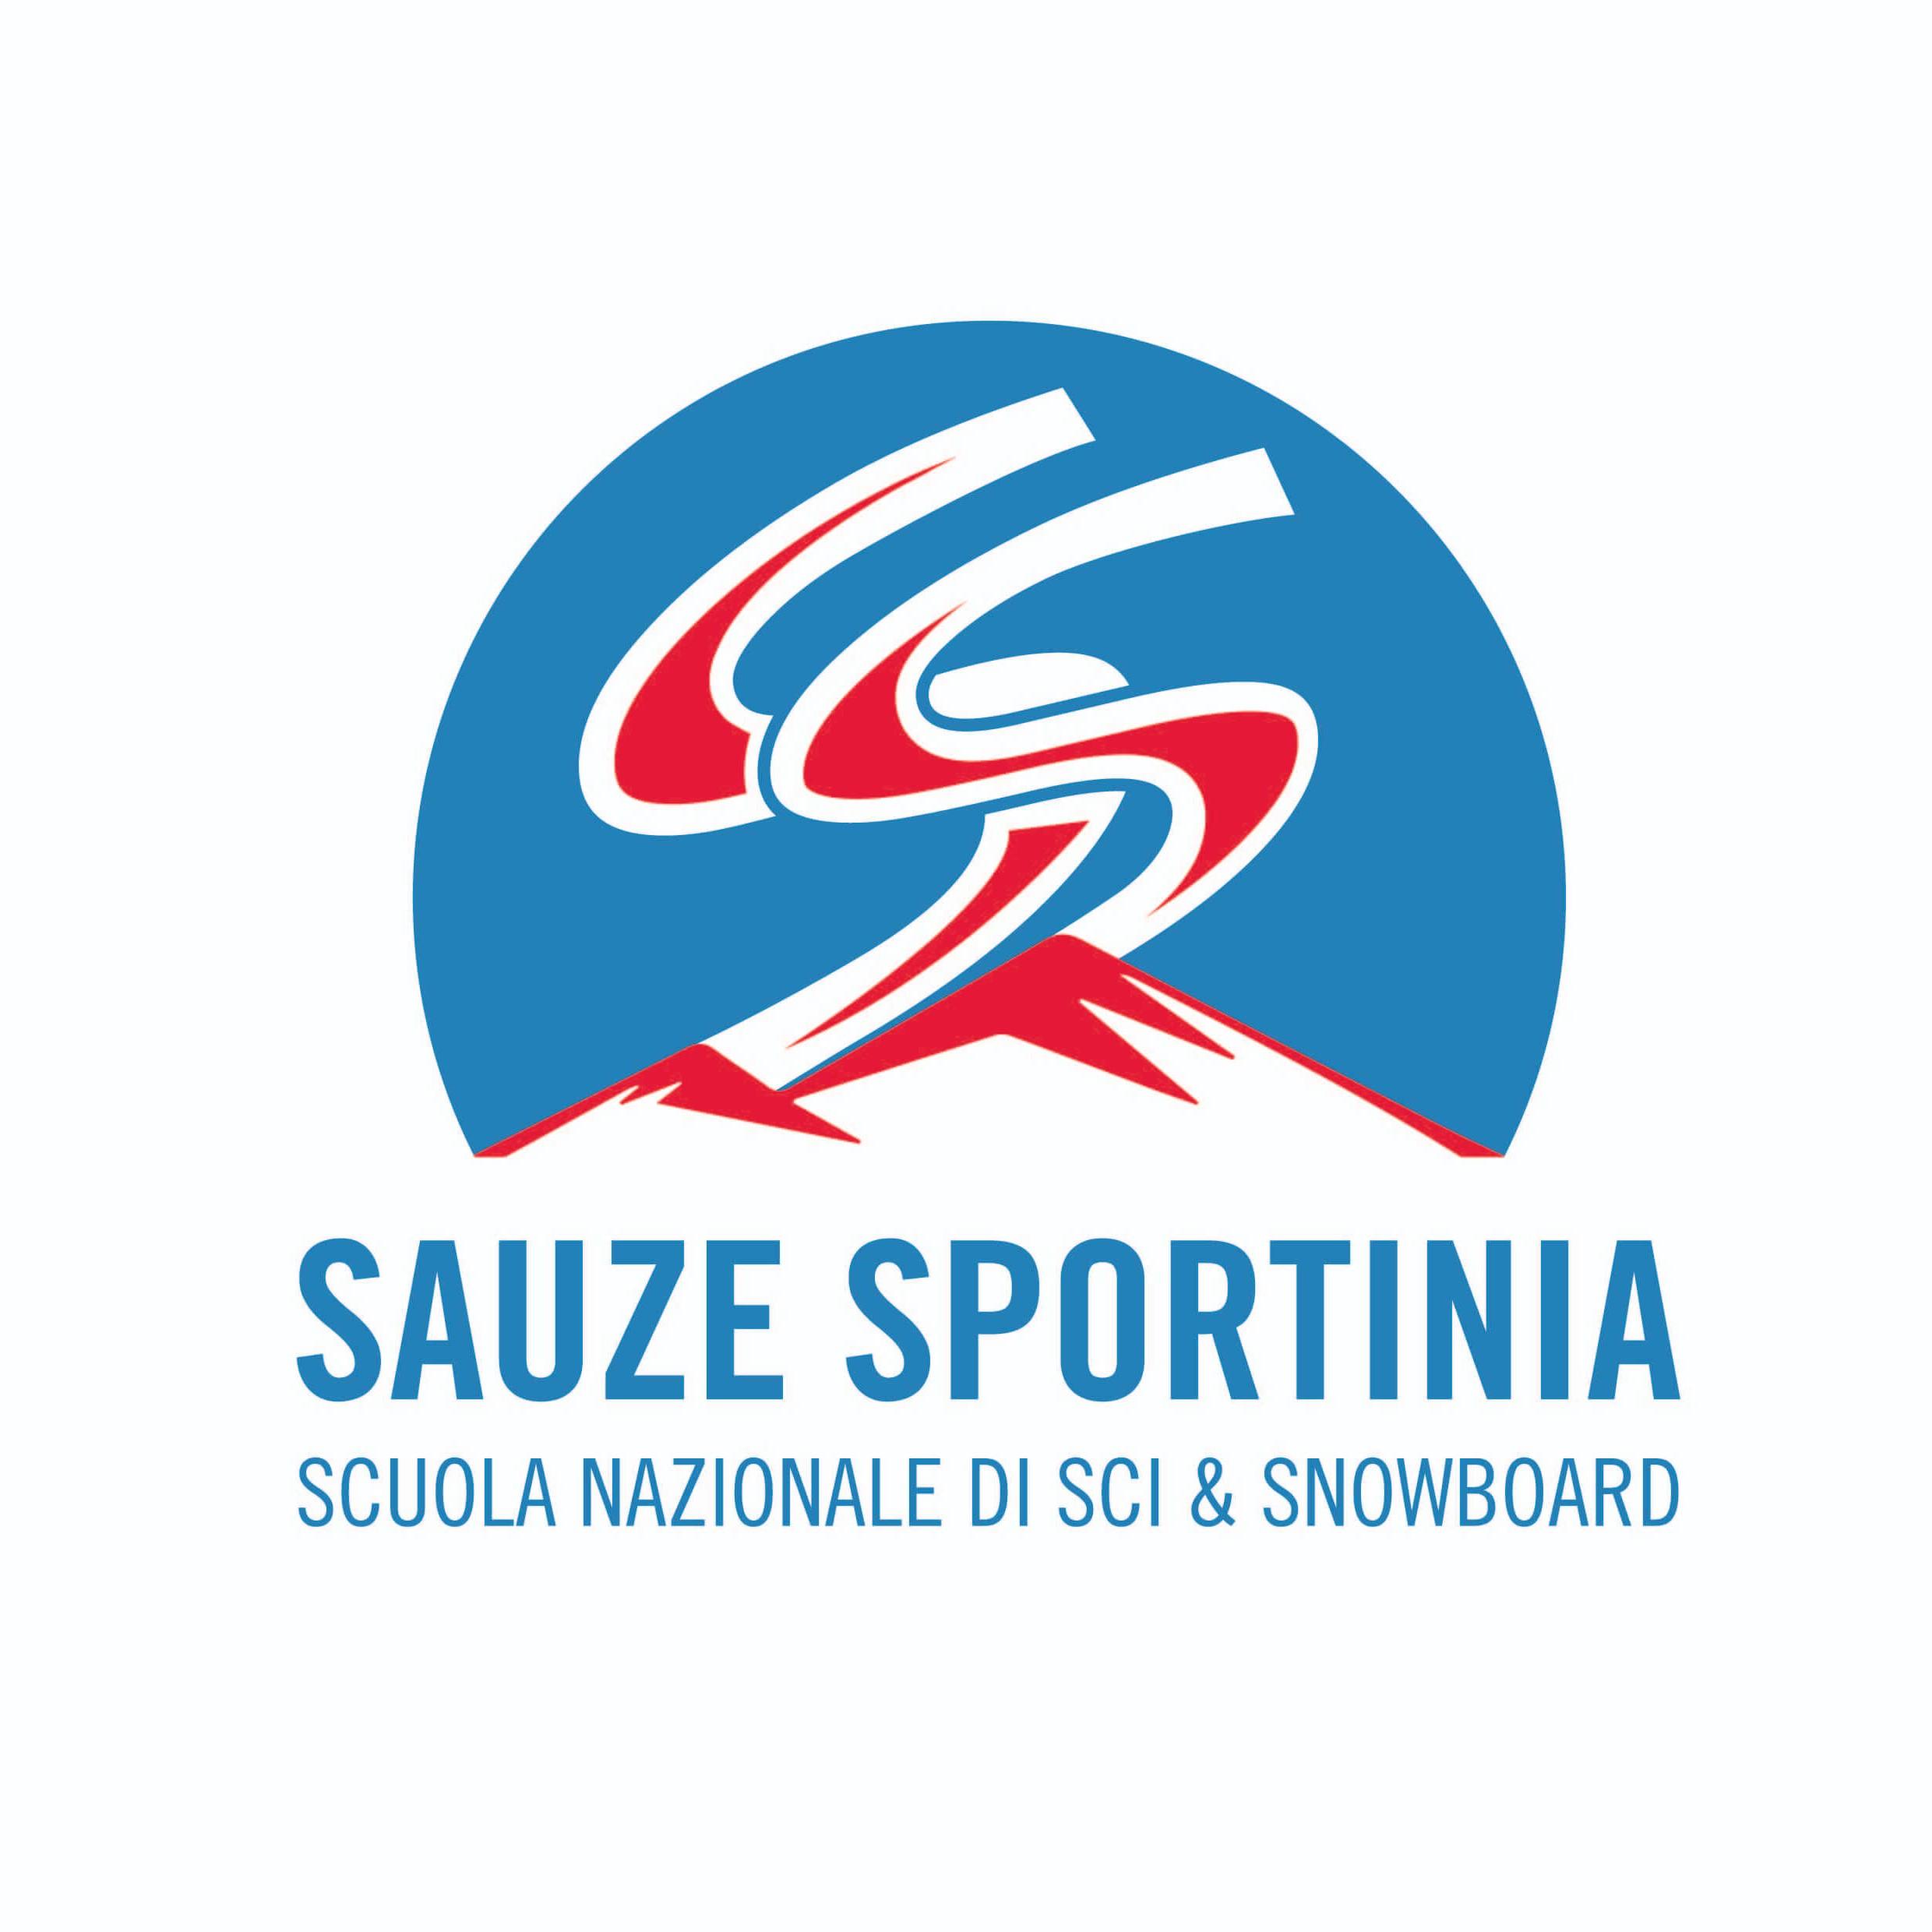 Adult Ski Lessons for All Levels from Scuola di Sci Sauze Sportinia